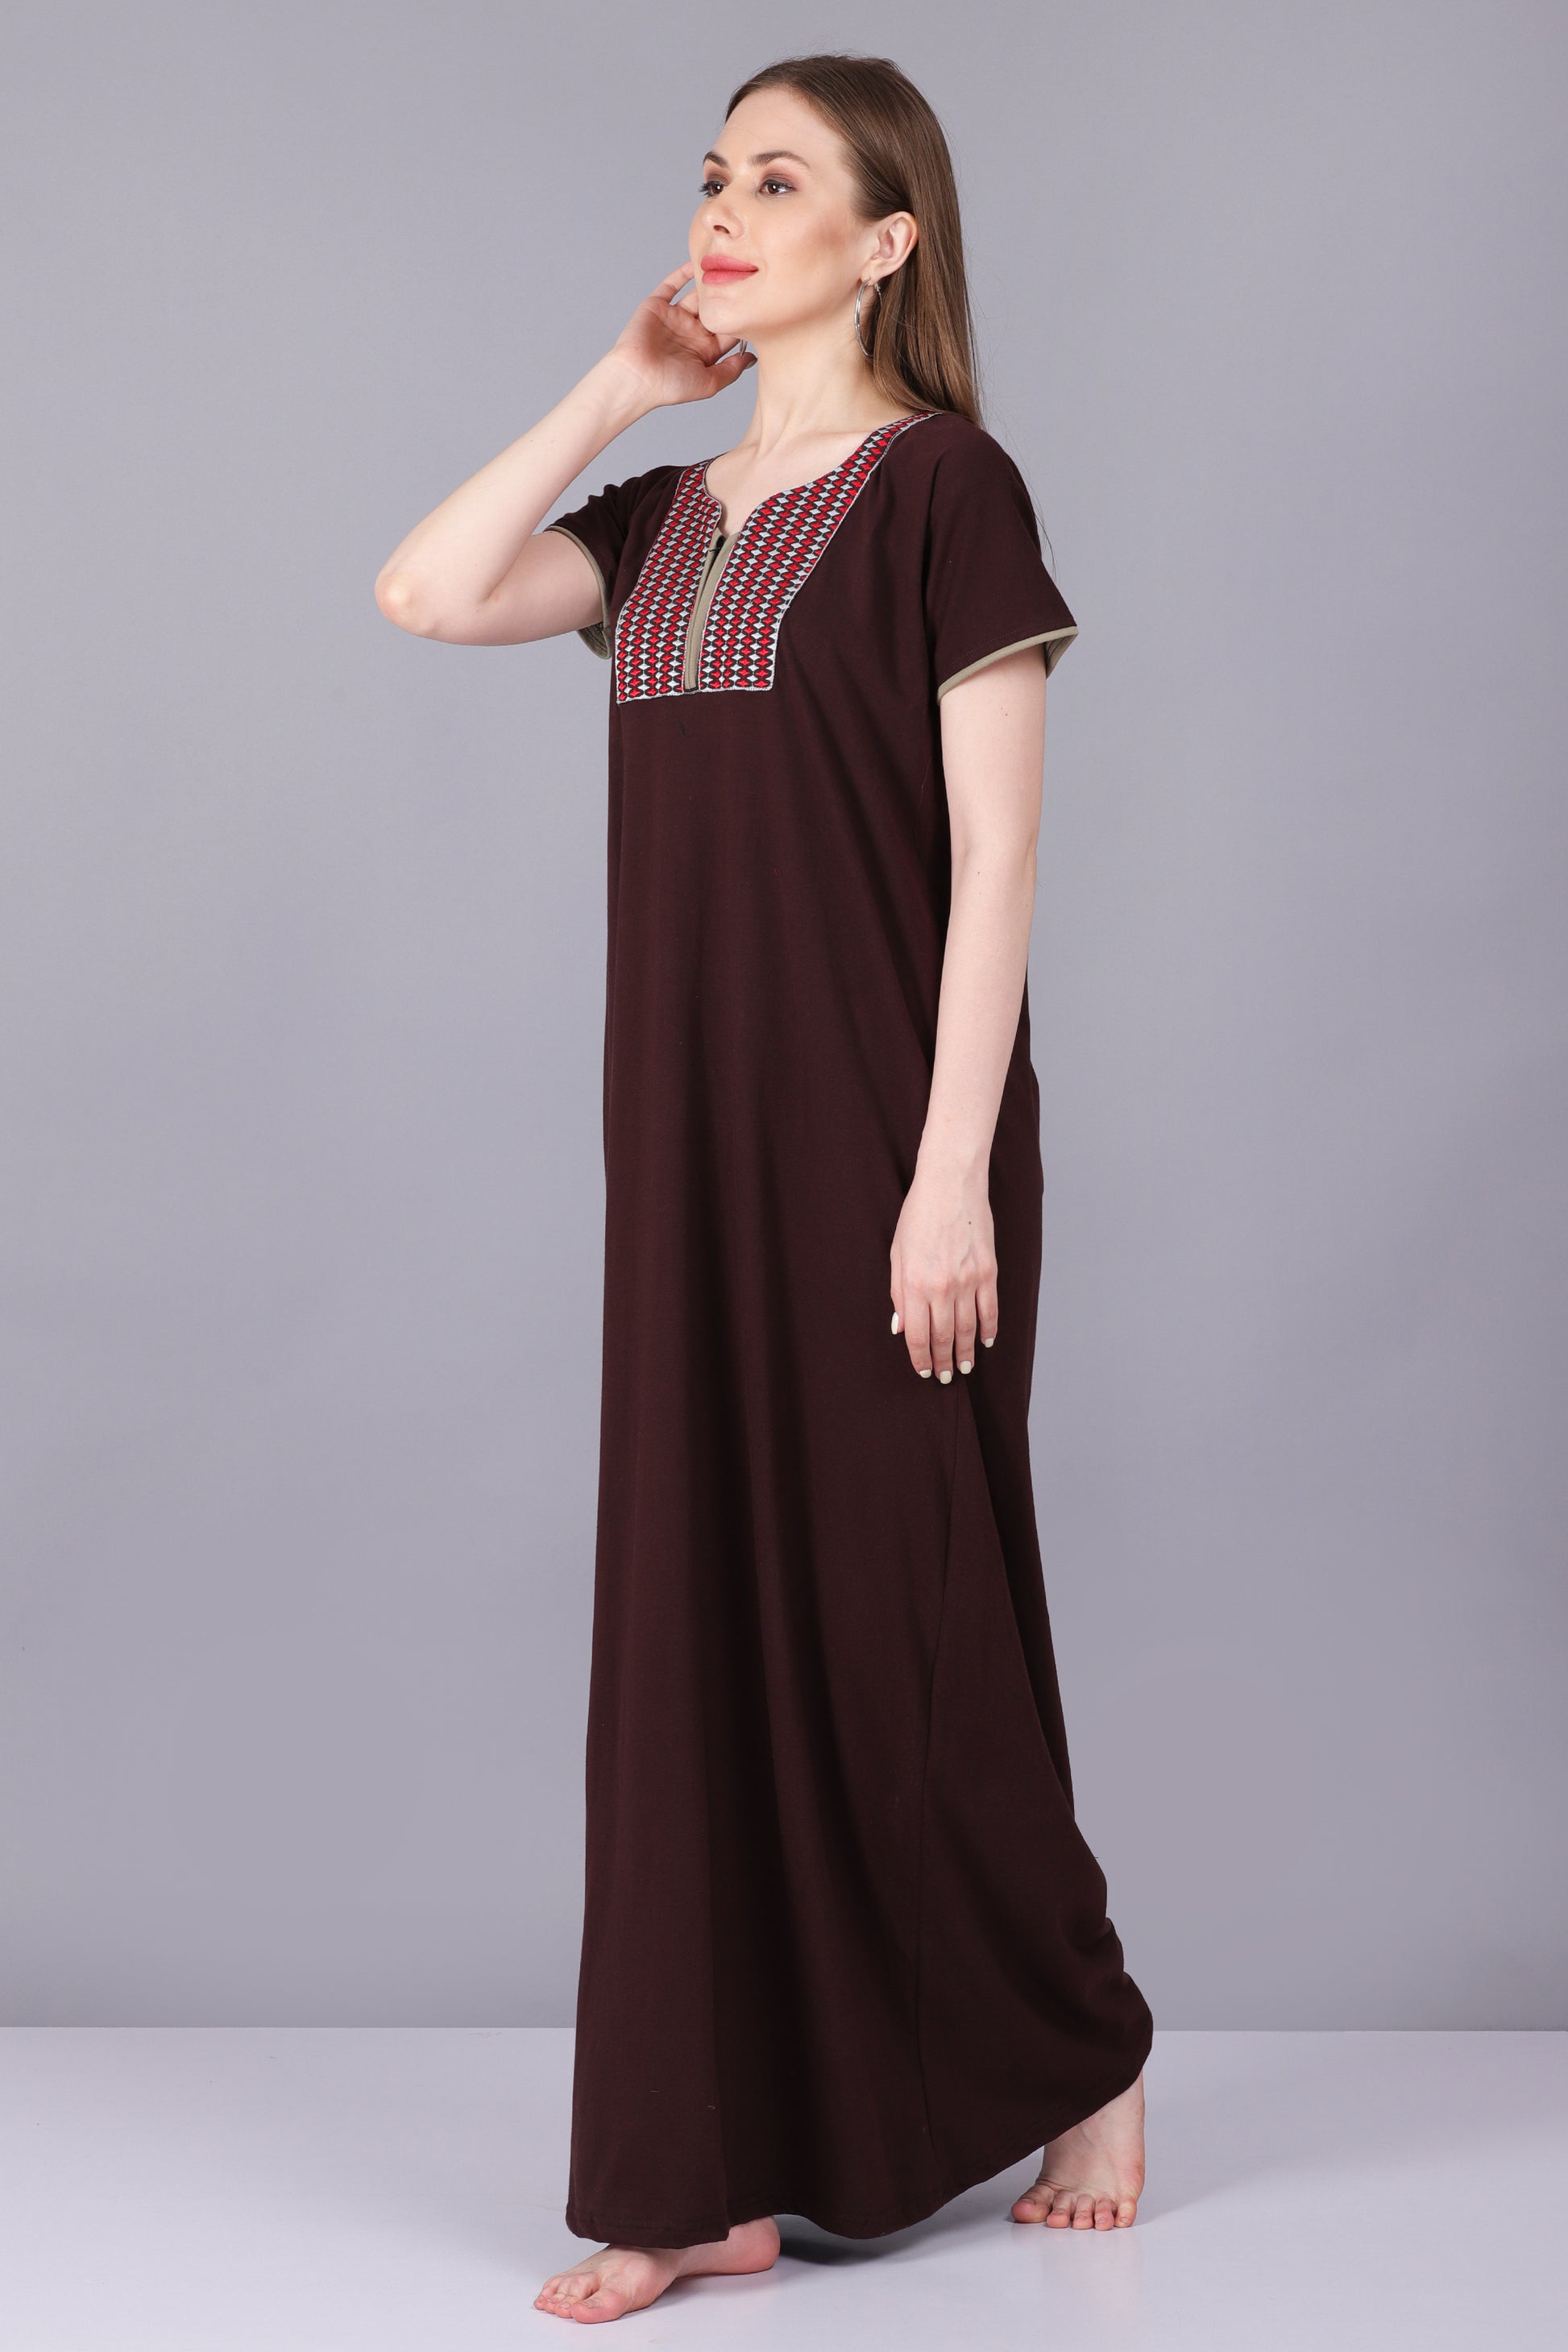 REN STAR Women's Floral Print Hosiery Cotton Full Sleeve Nightwear  Nighty/Maxi/Gown (Color-Pink, Size-XXL)